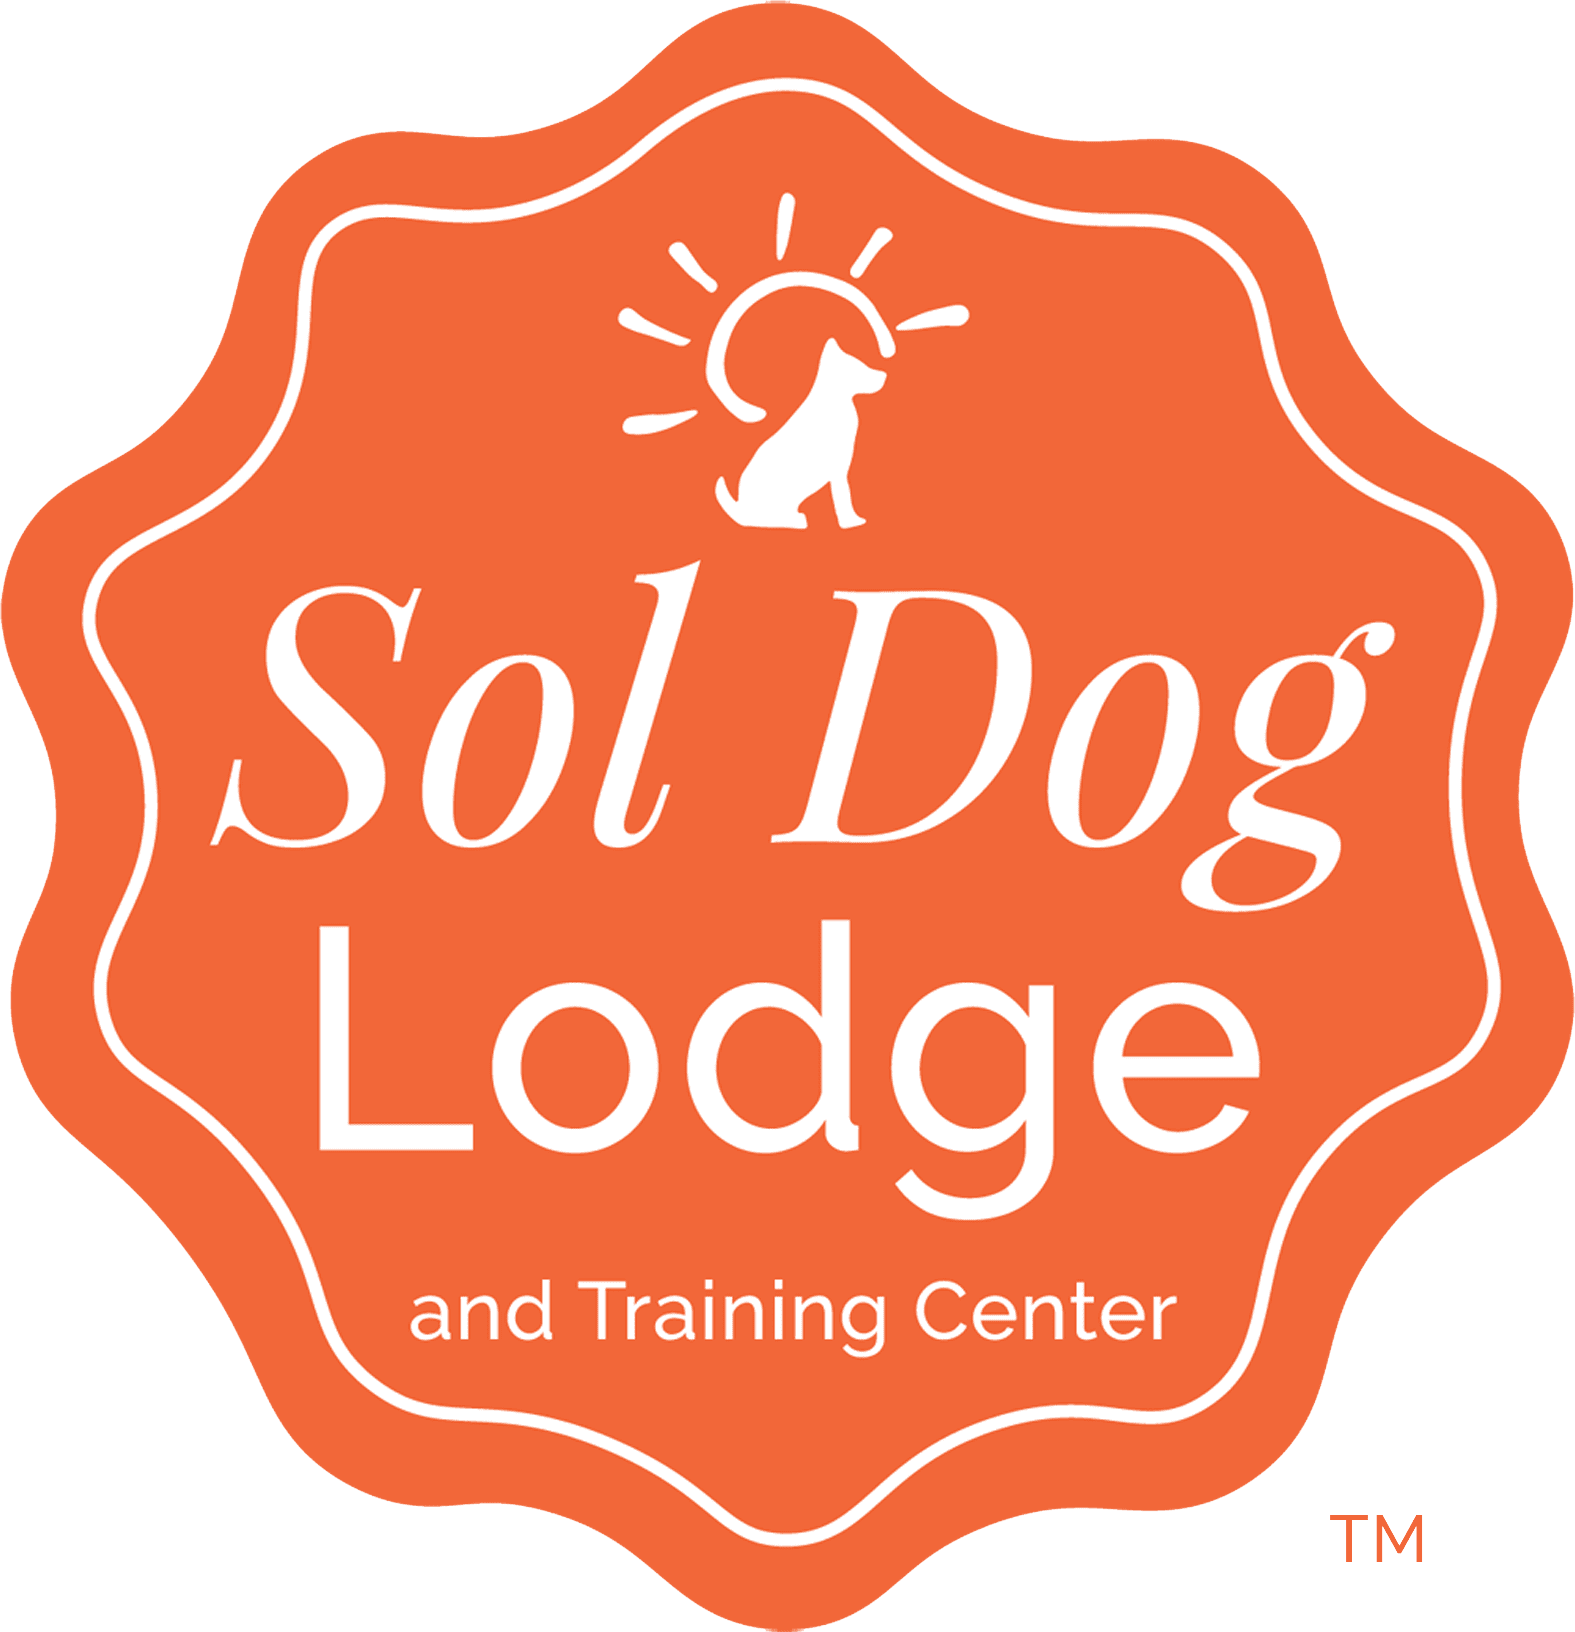 Sol Dog Lodge and Training Center logo